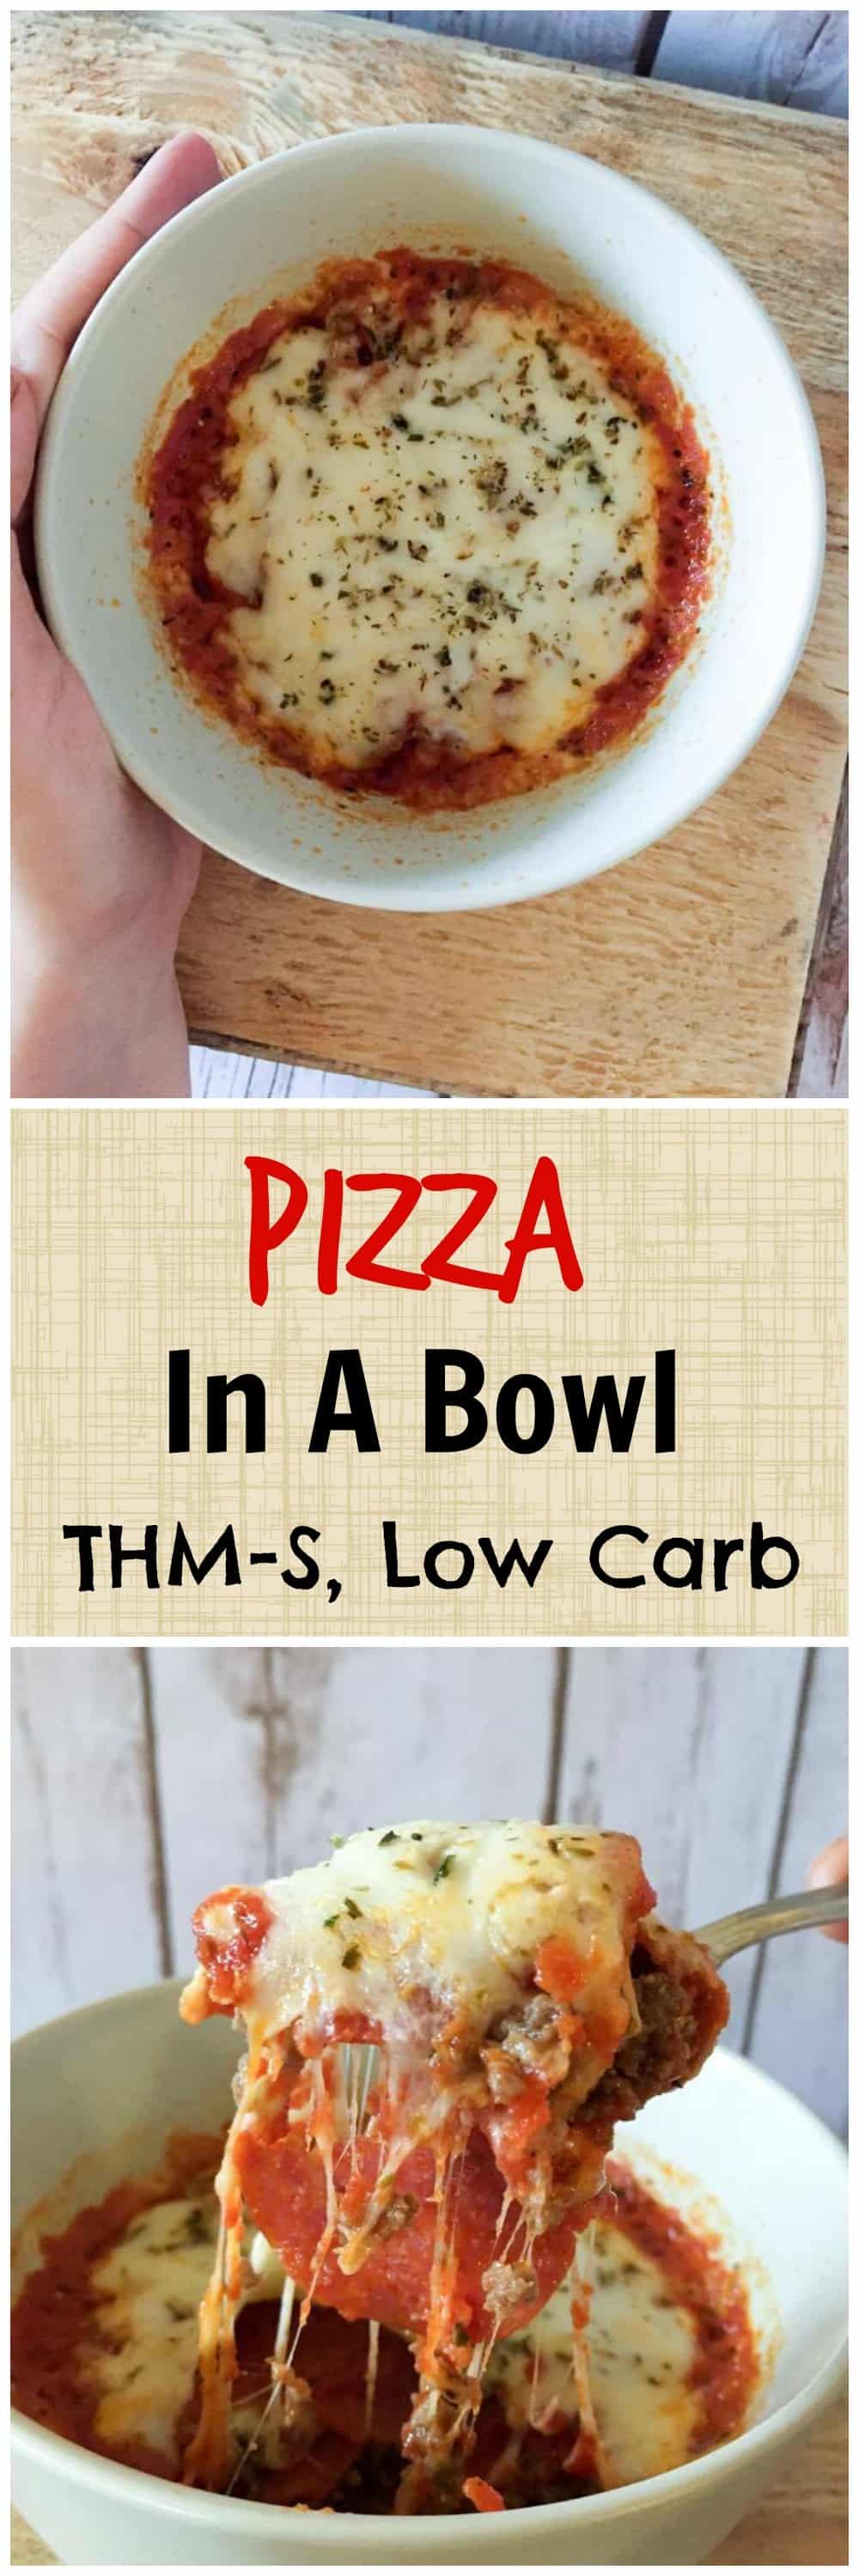 lo carb-pizza-thm-trim healthy mama